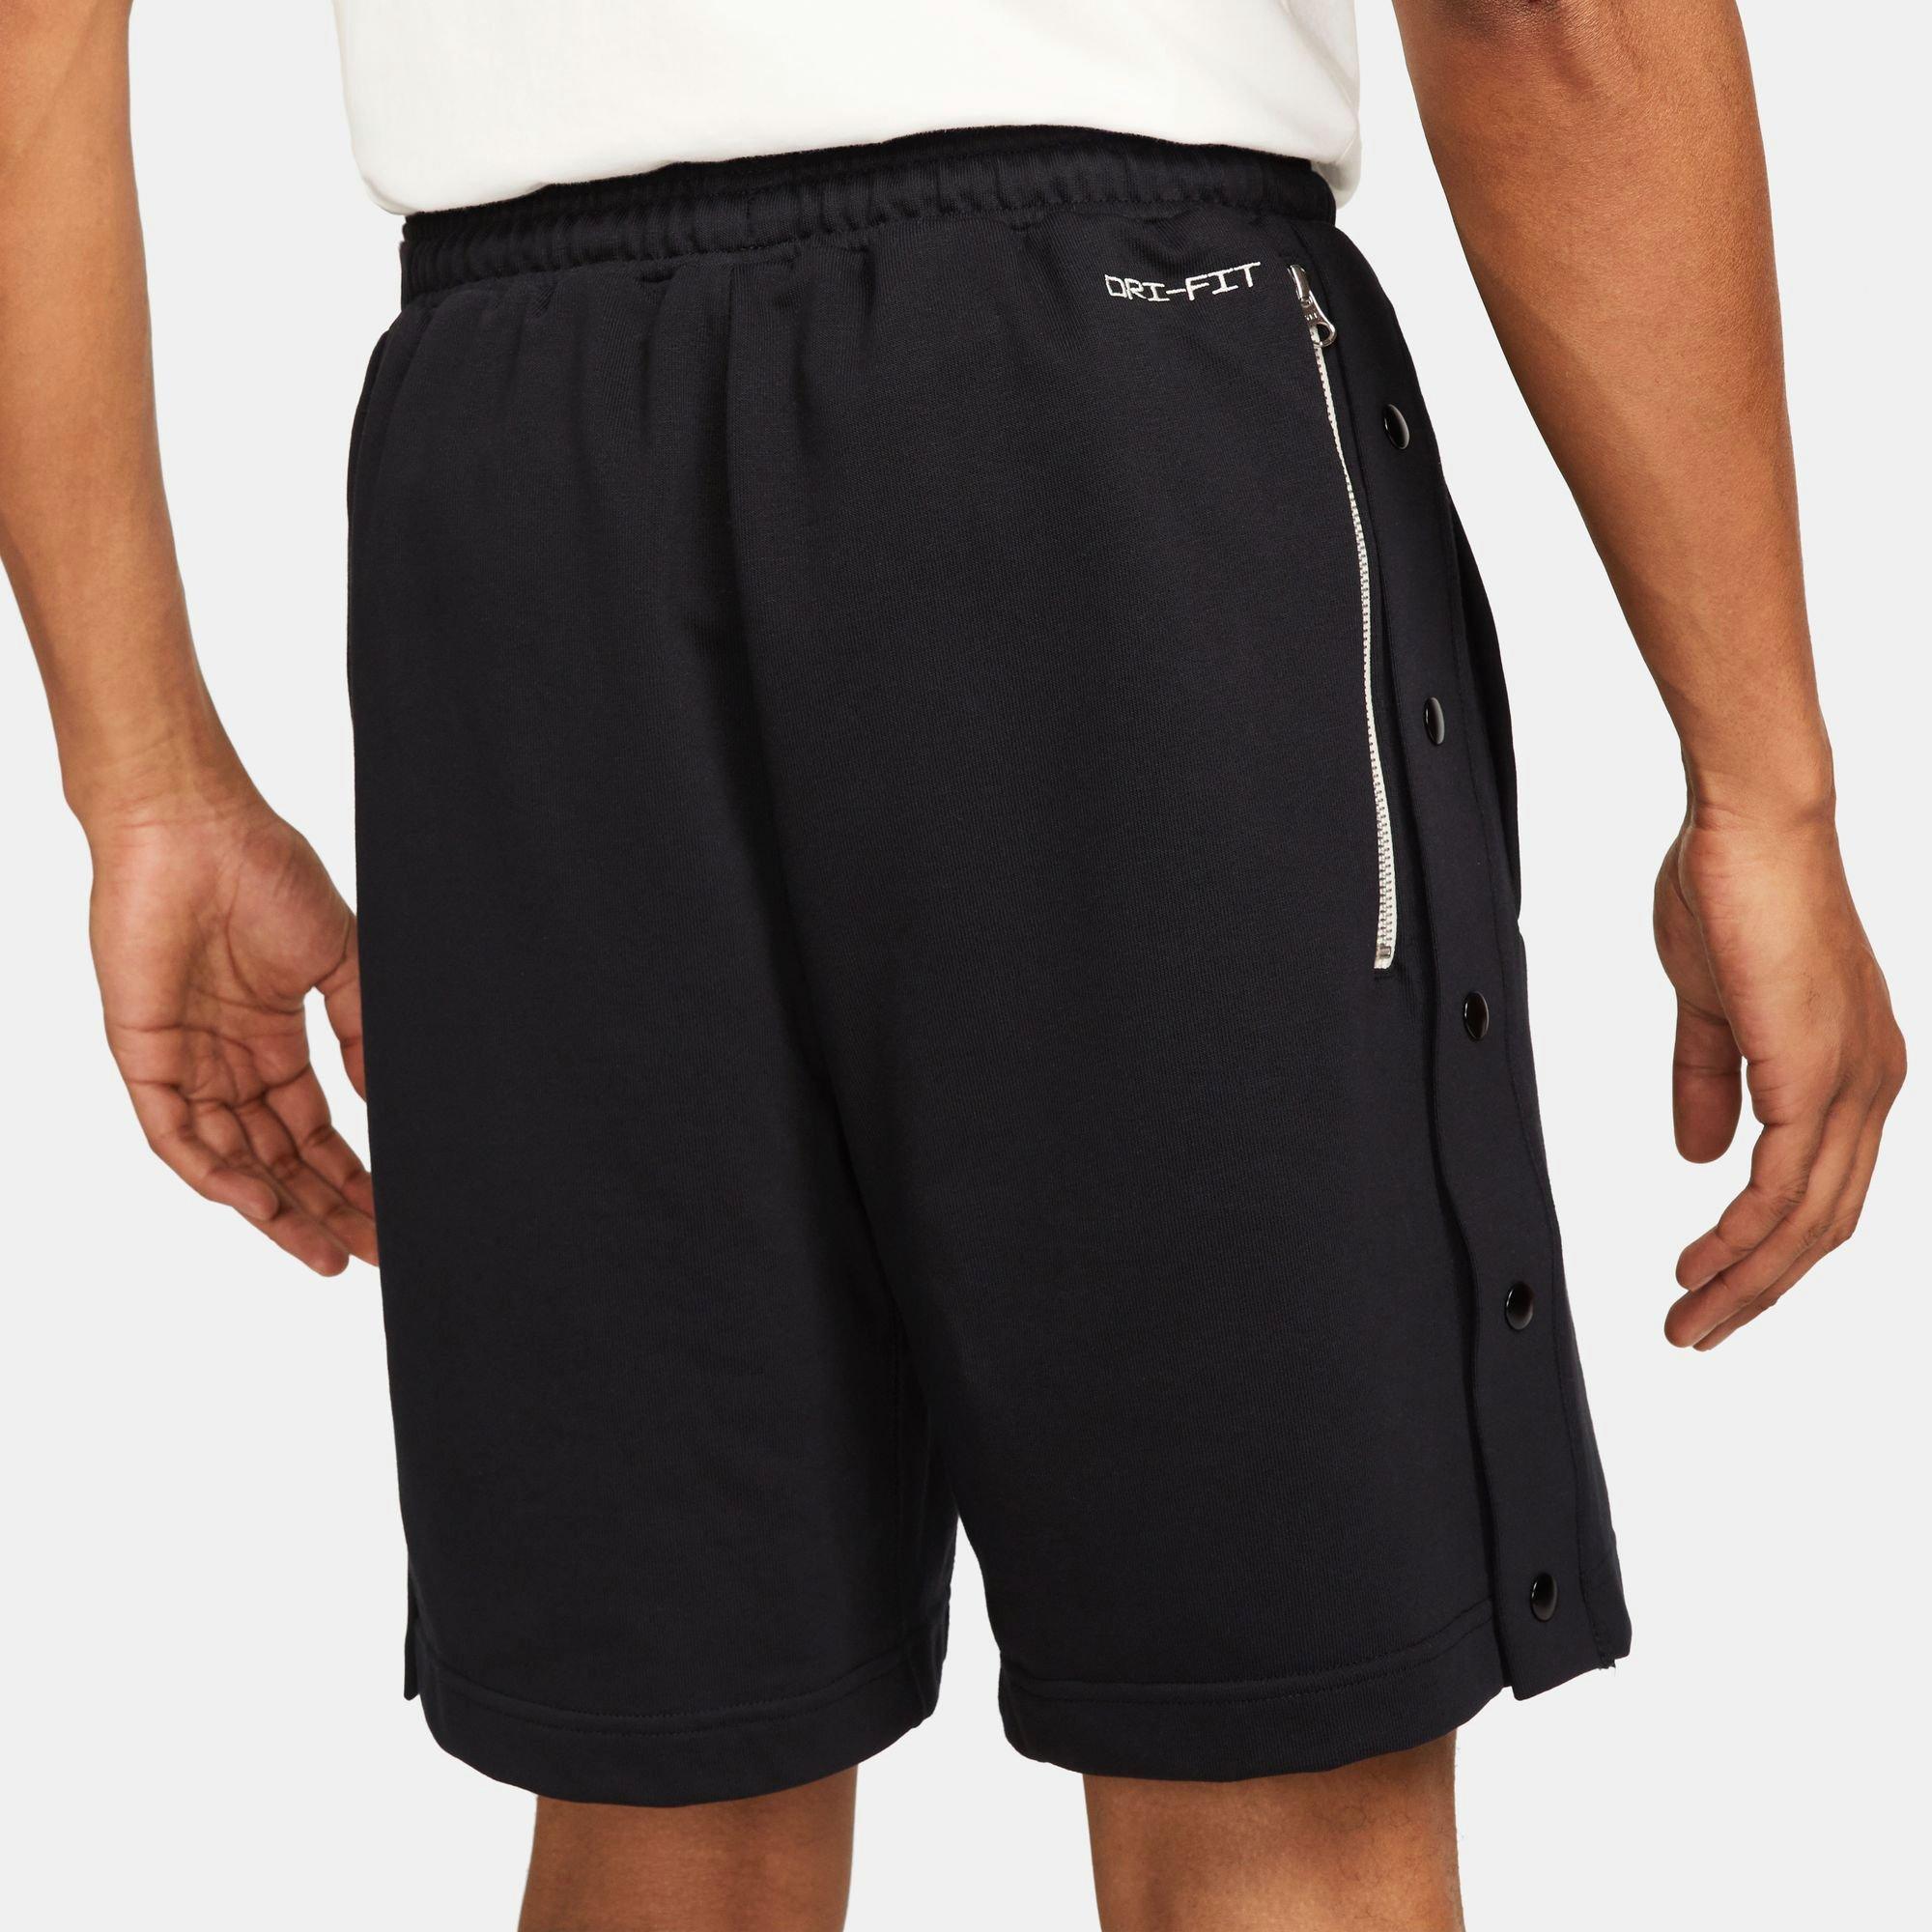 Nike Standard Issue Men's Dri-FIT 8 Basketball Shorts.